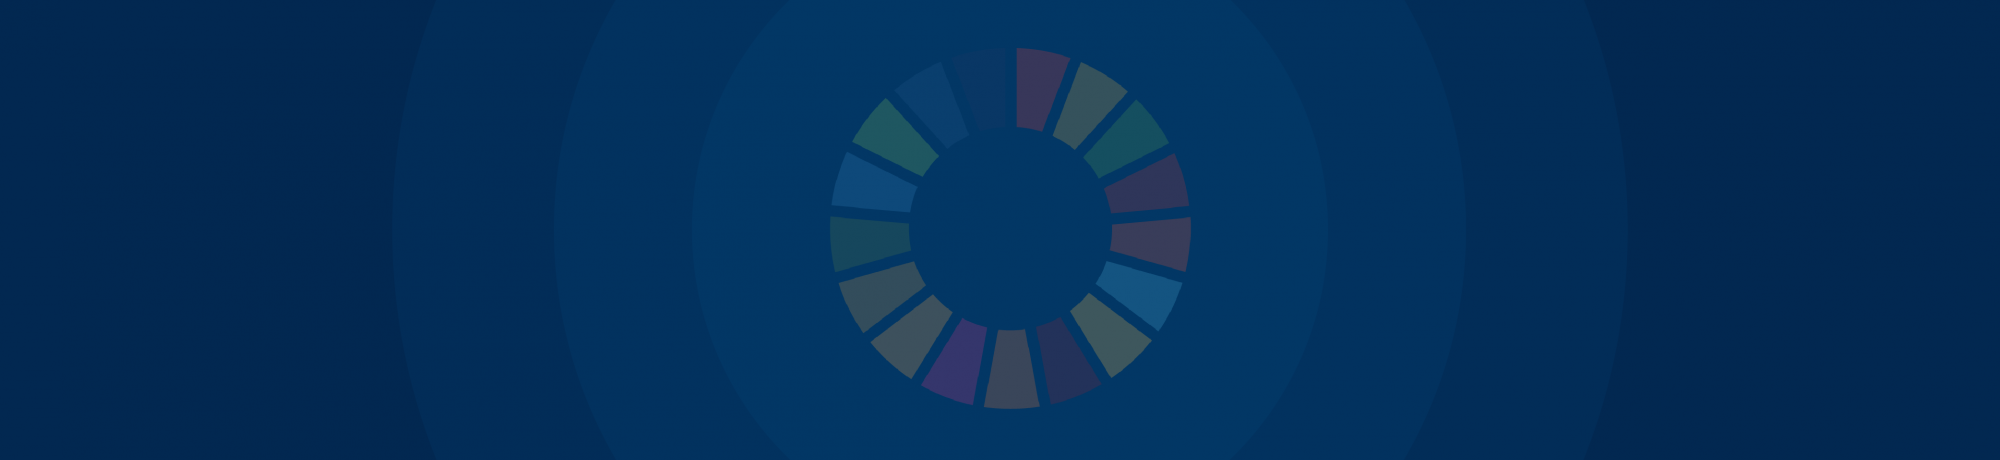 Blue banner with SDG wheel